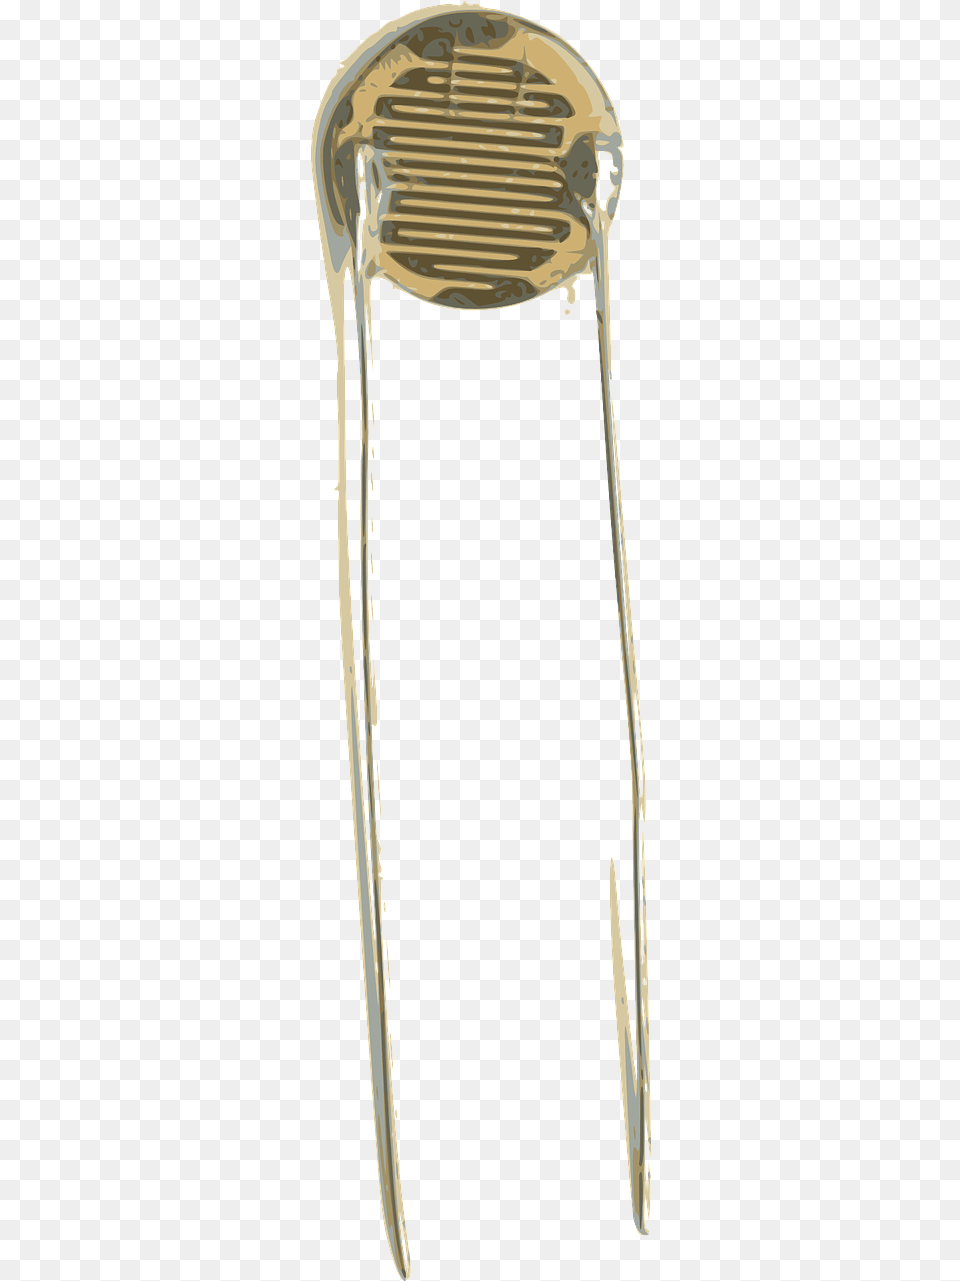 Light Dependent Resistor Without Background, Furniture, Electronics, Hardware Png Image